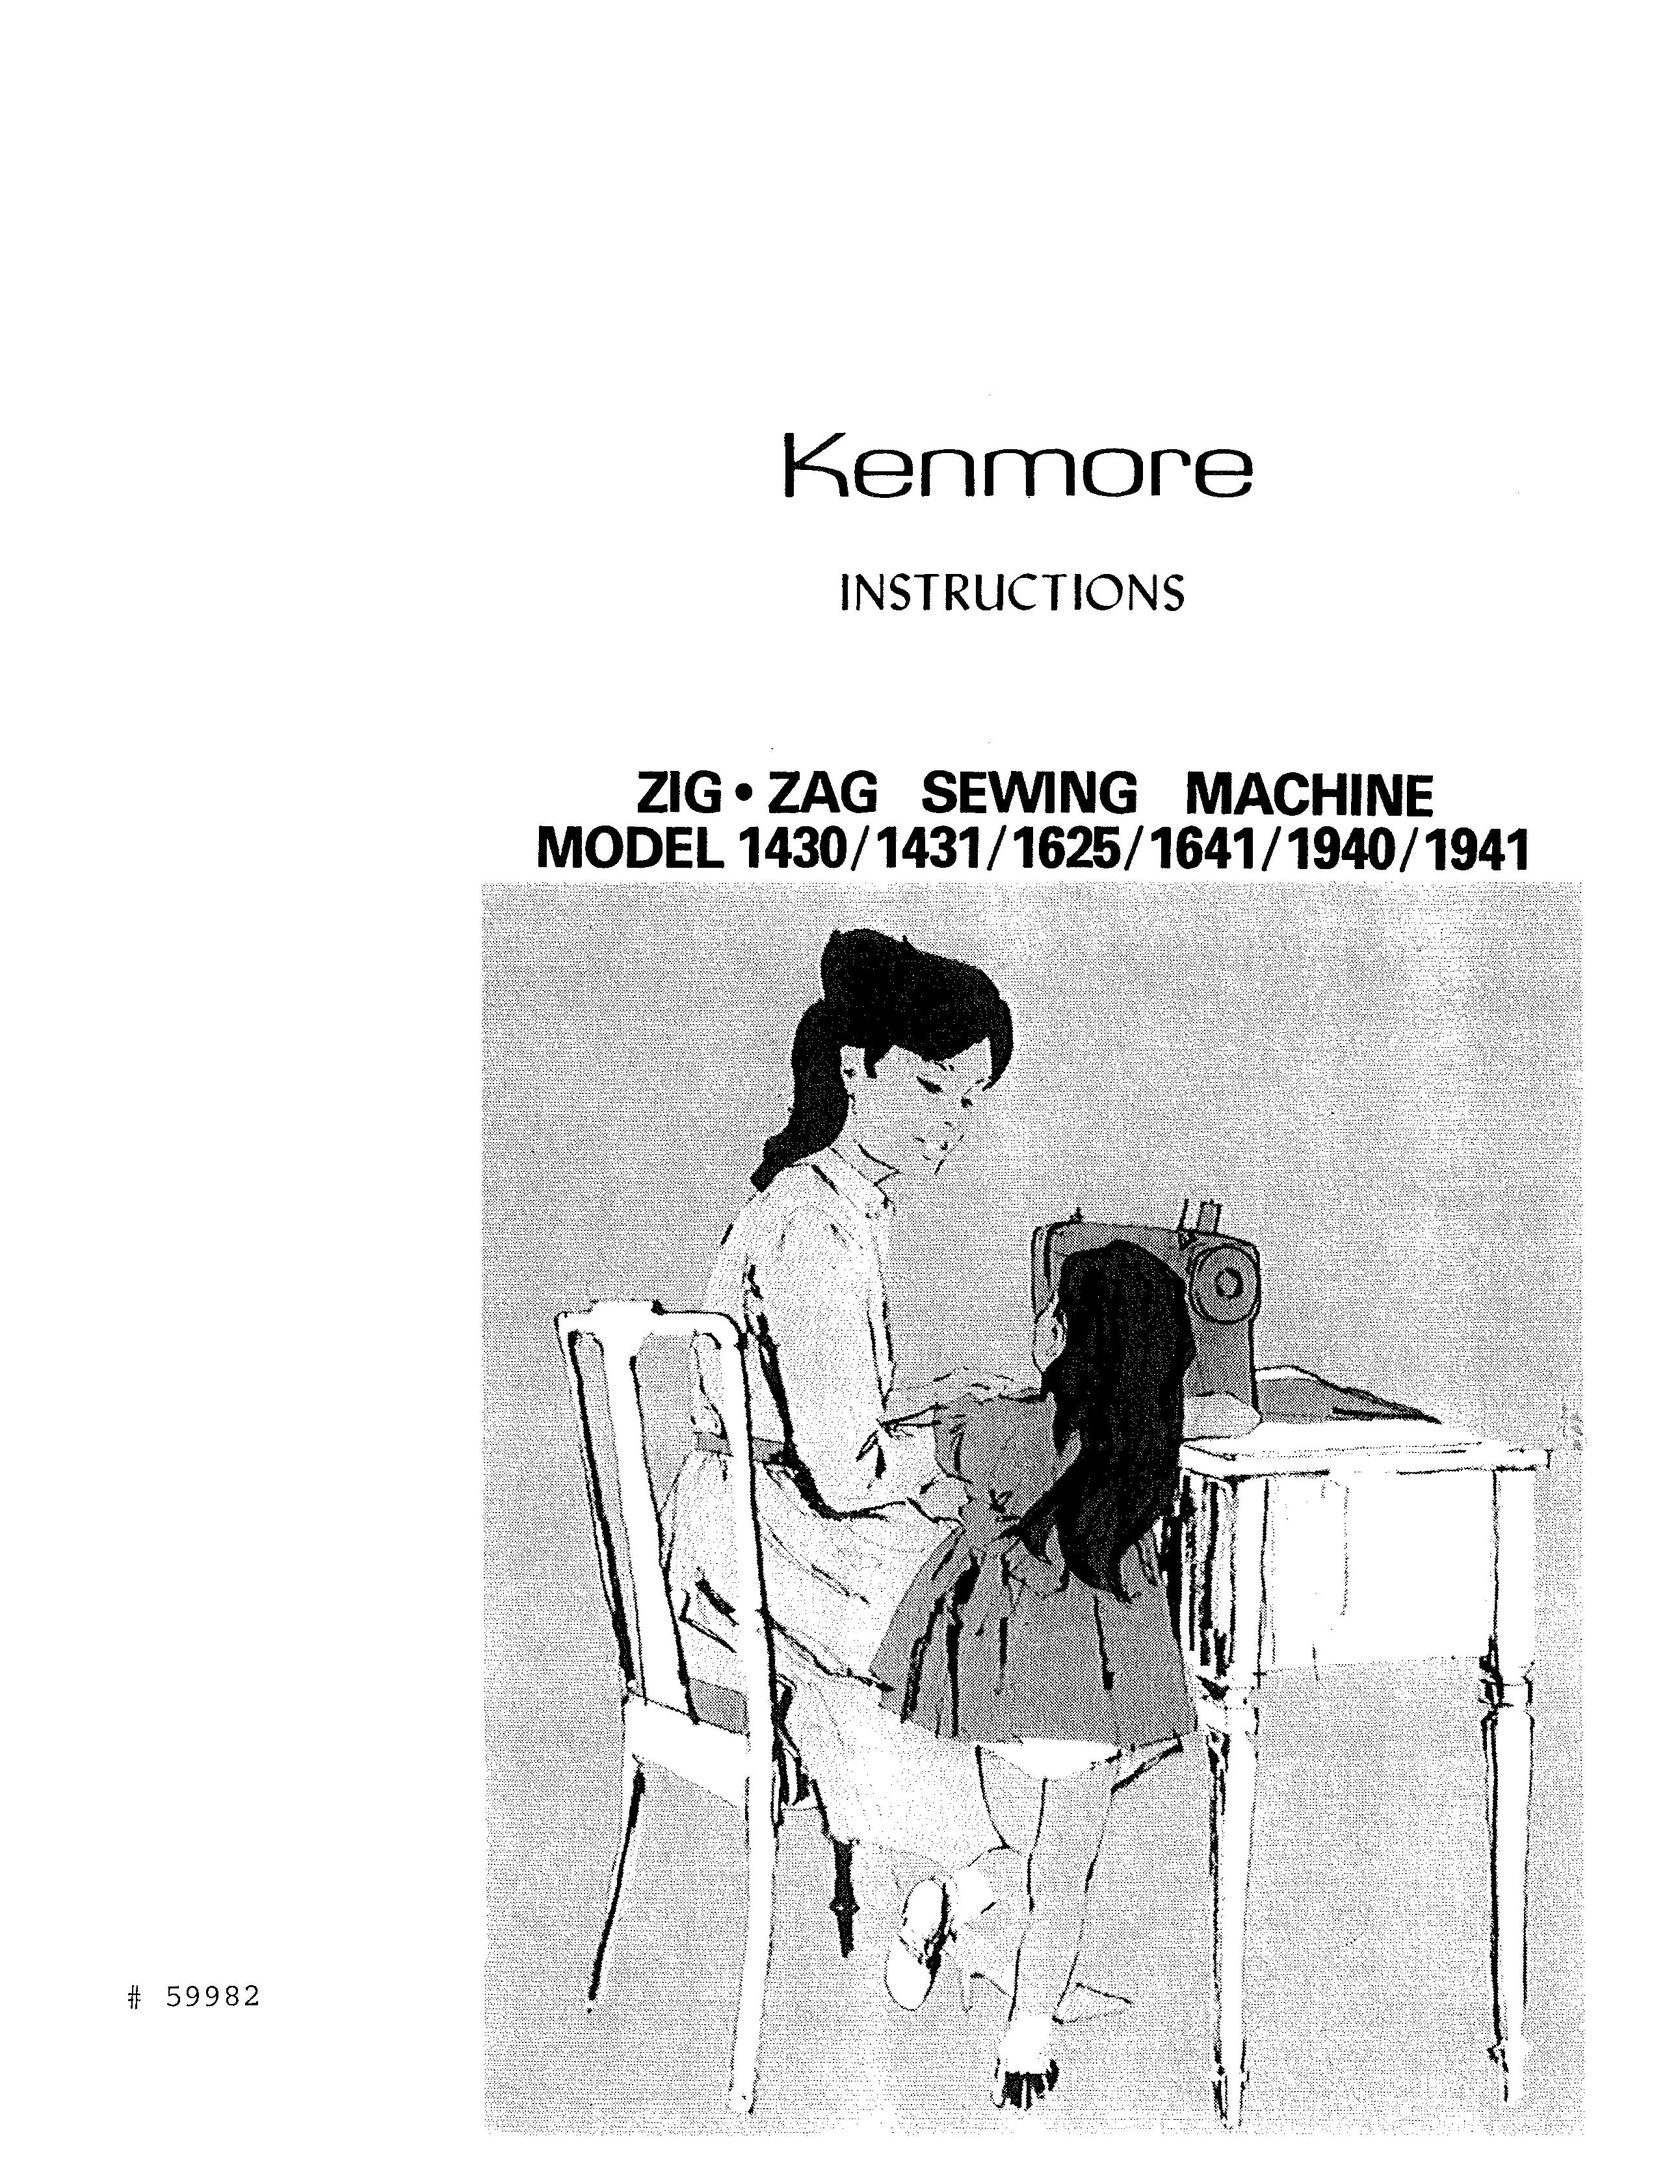 Kenmore 1641 Sewing Machine User Manual